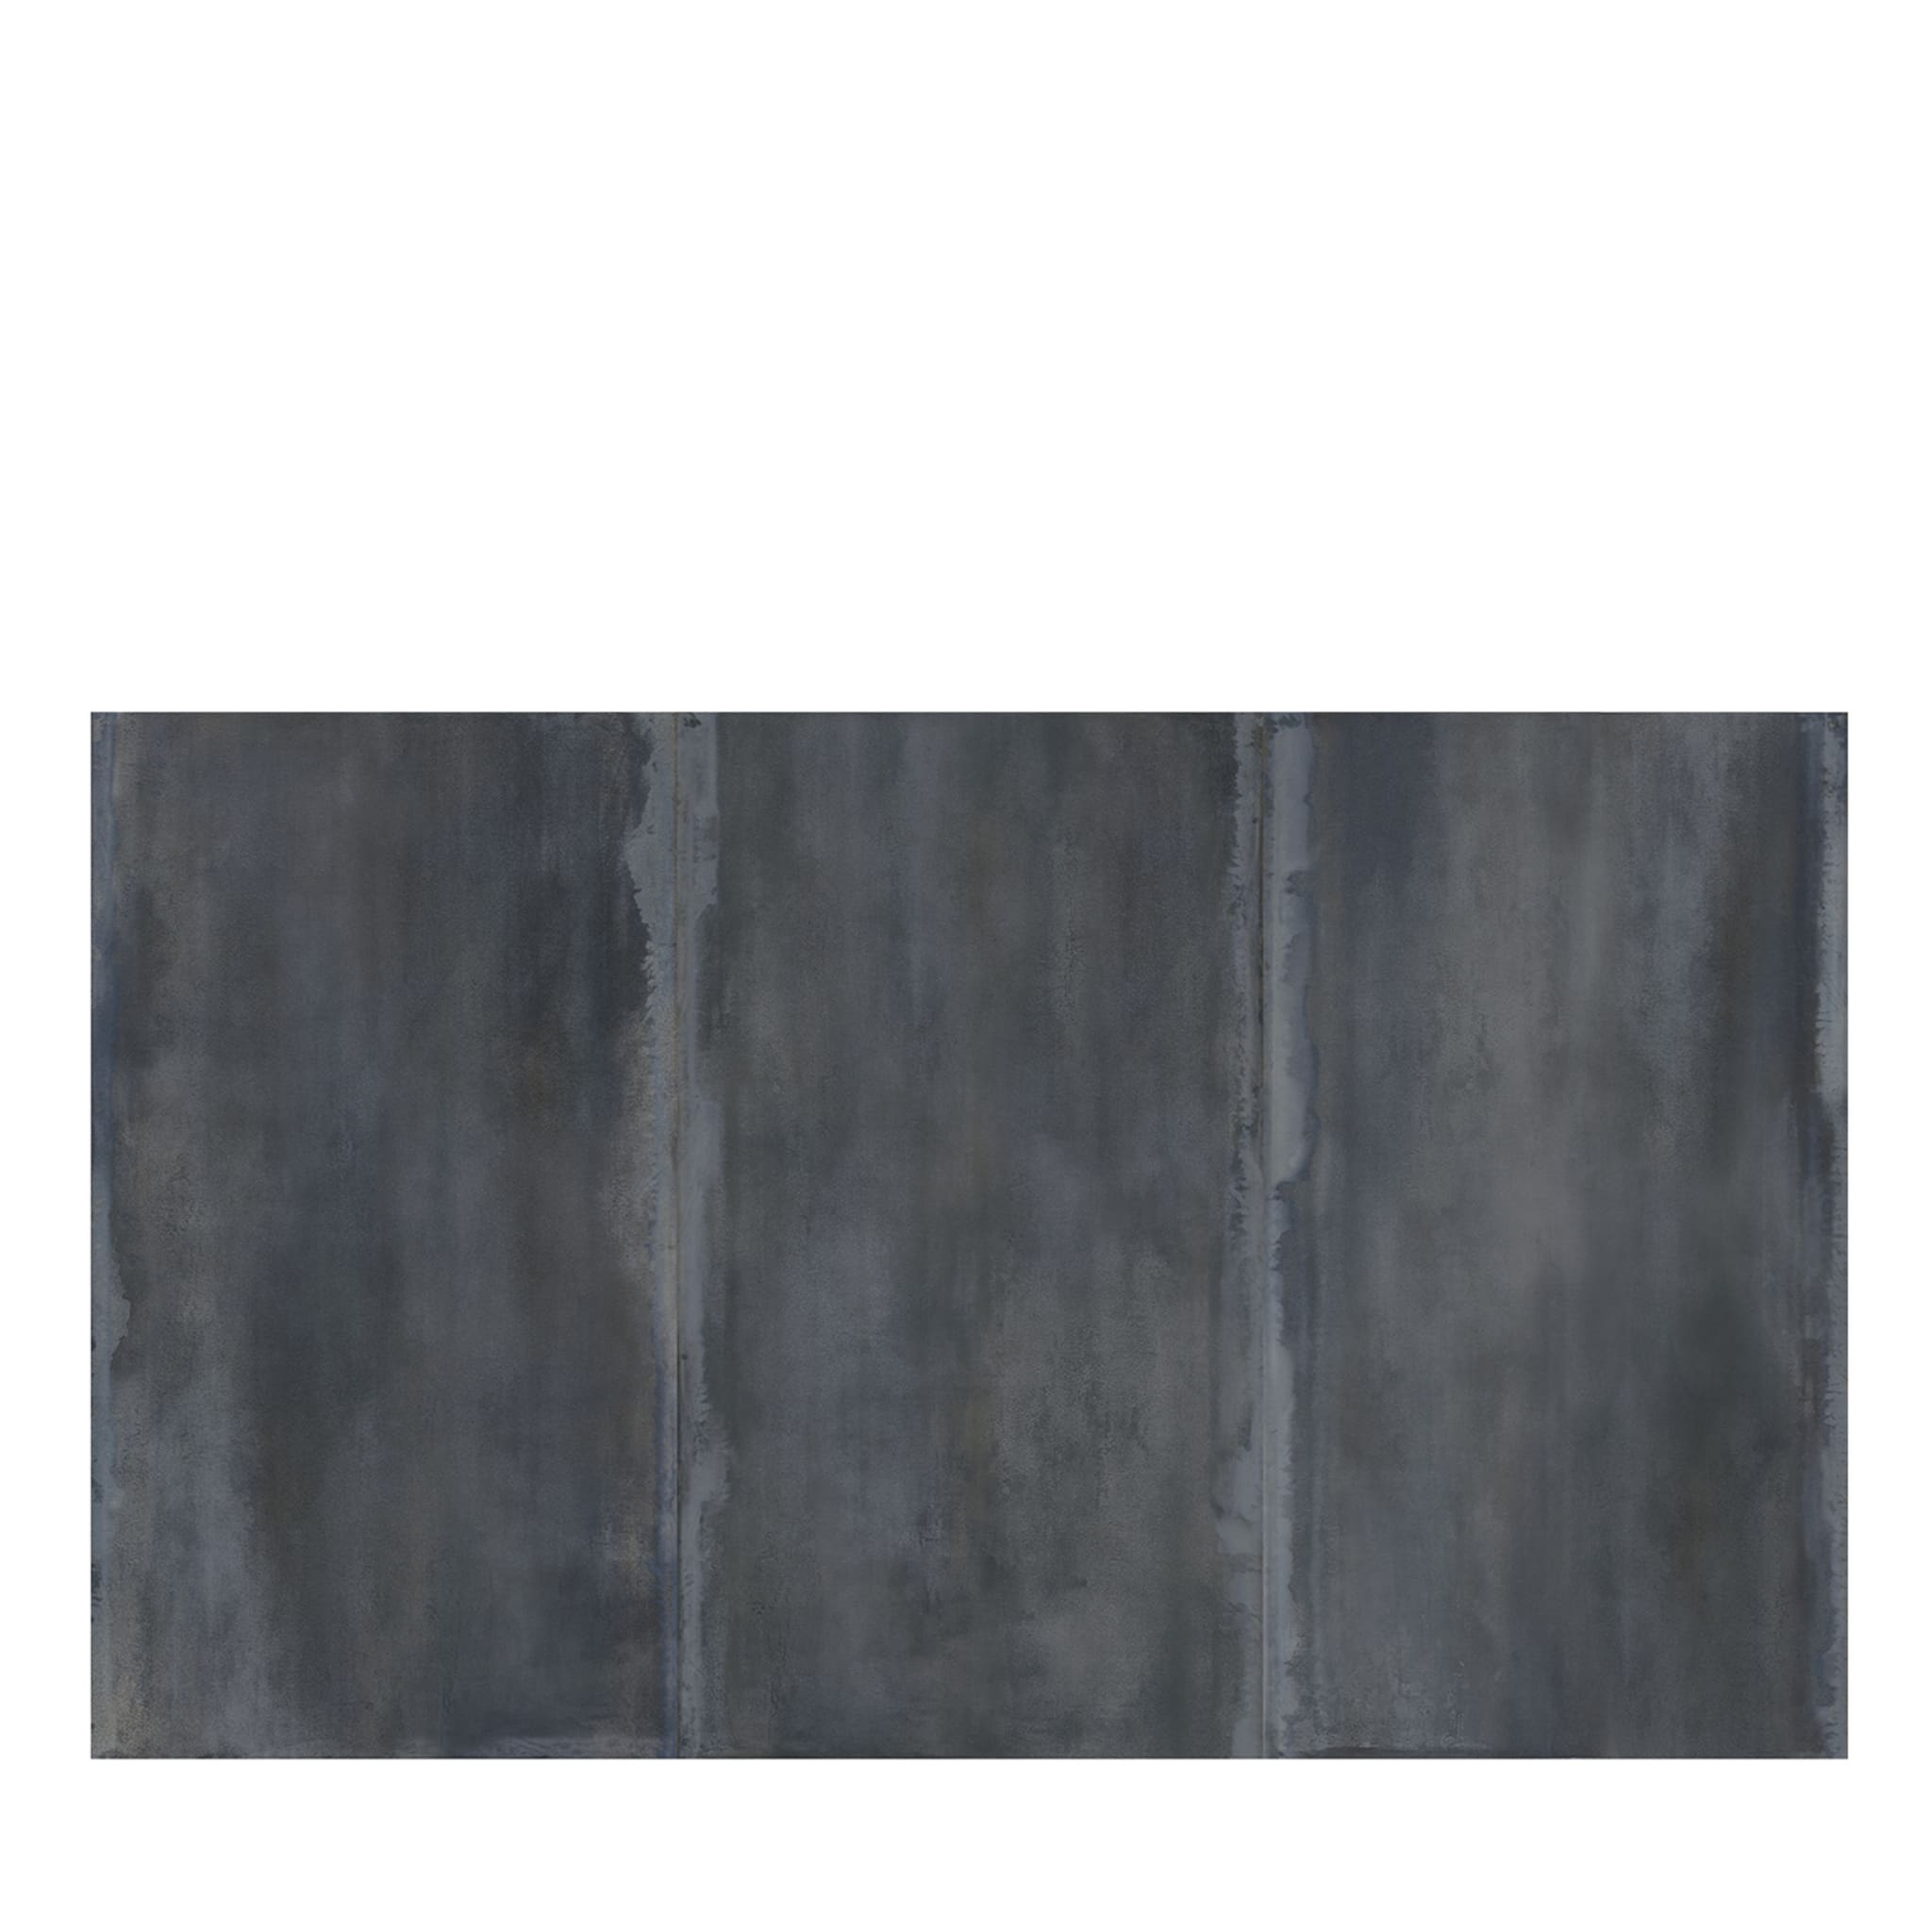 Metallo Cemento by Jv Lab wallpaper#3 - Main view